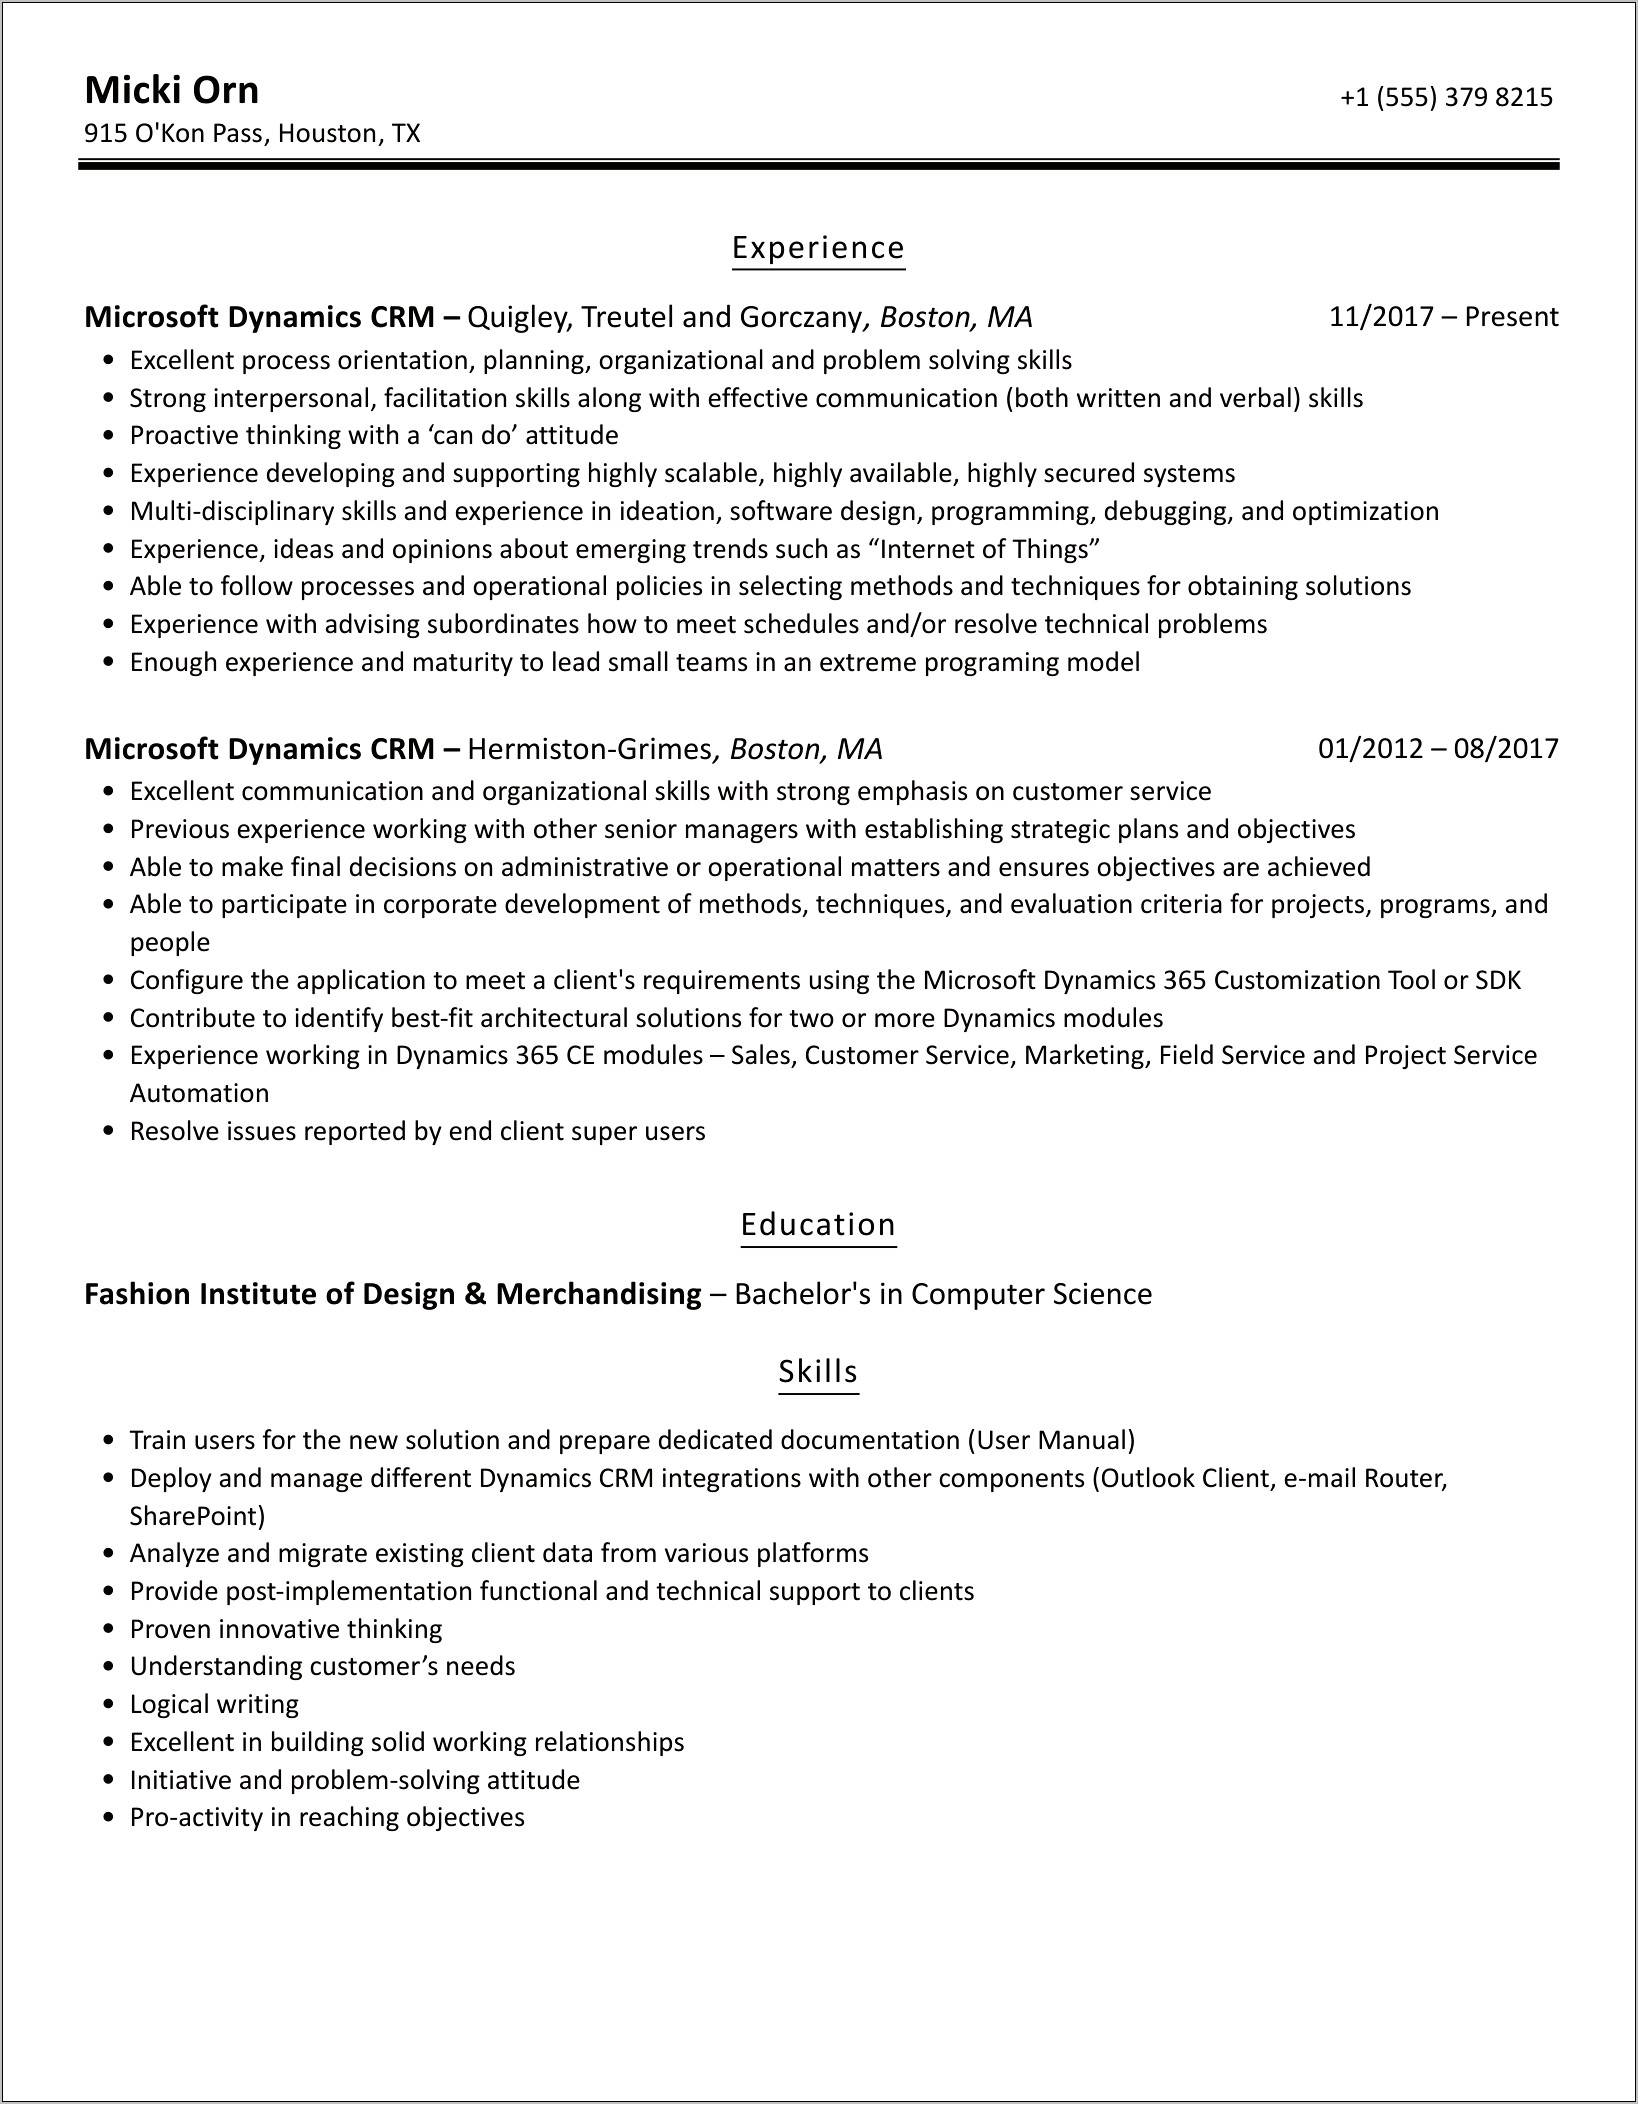 Microsoft Dynamics 365 Sample Resume